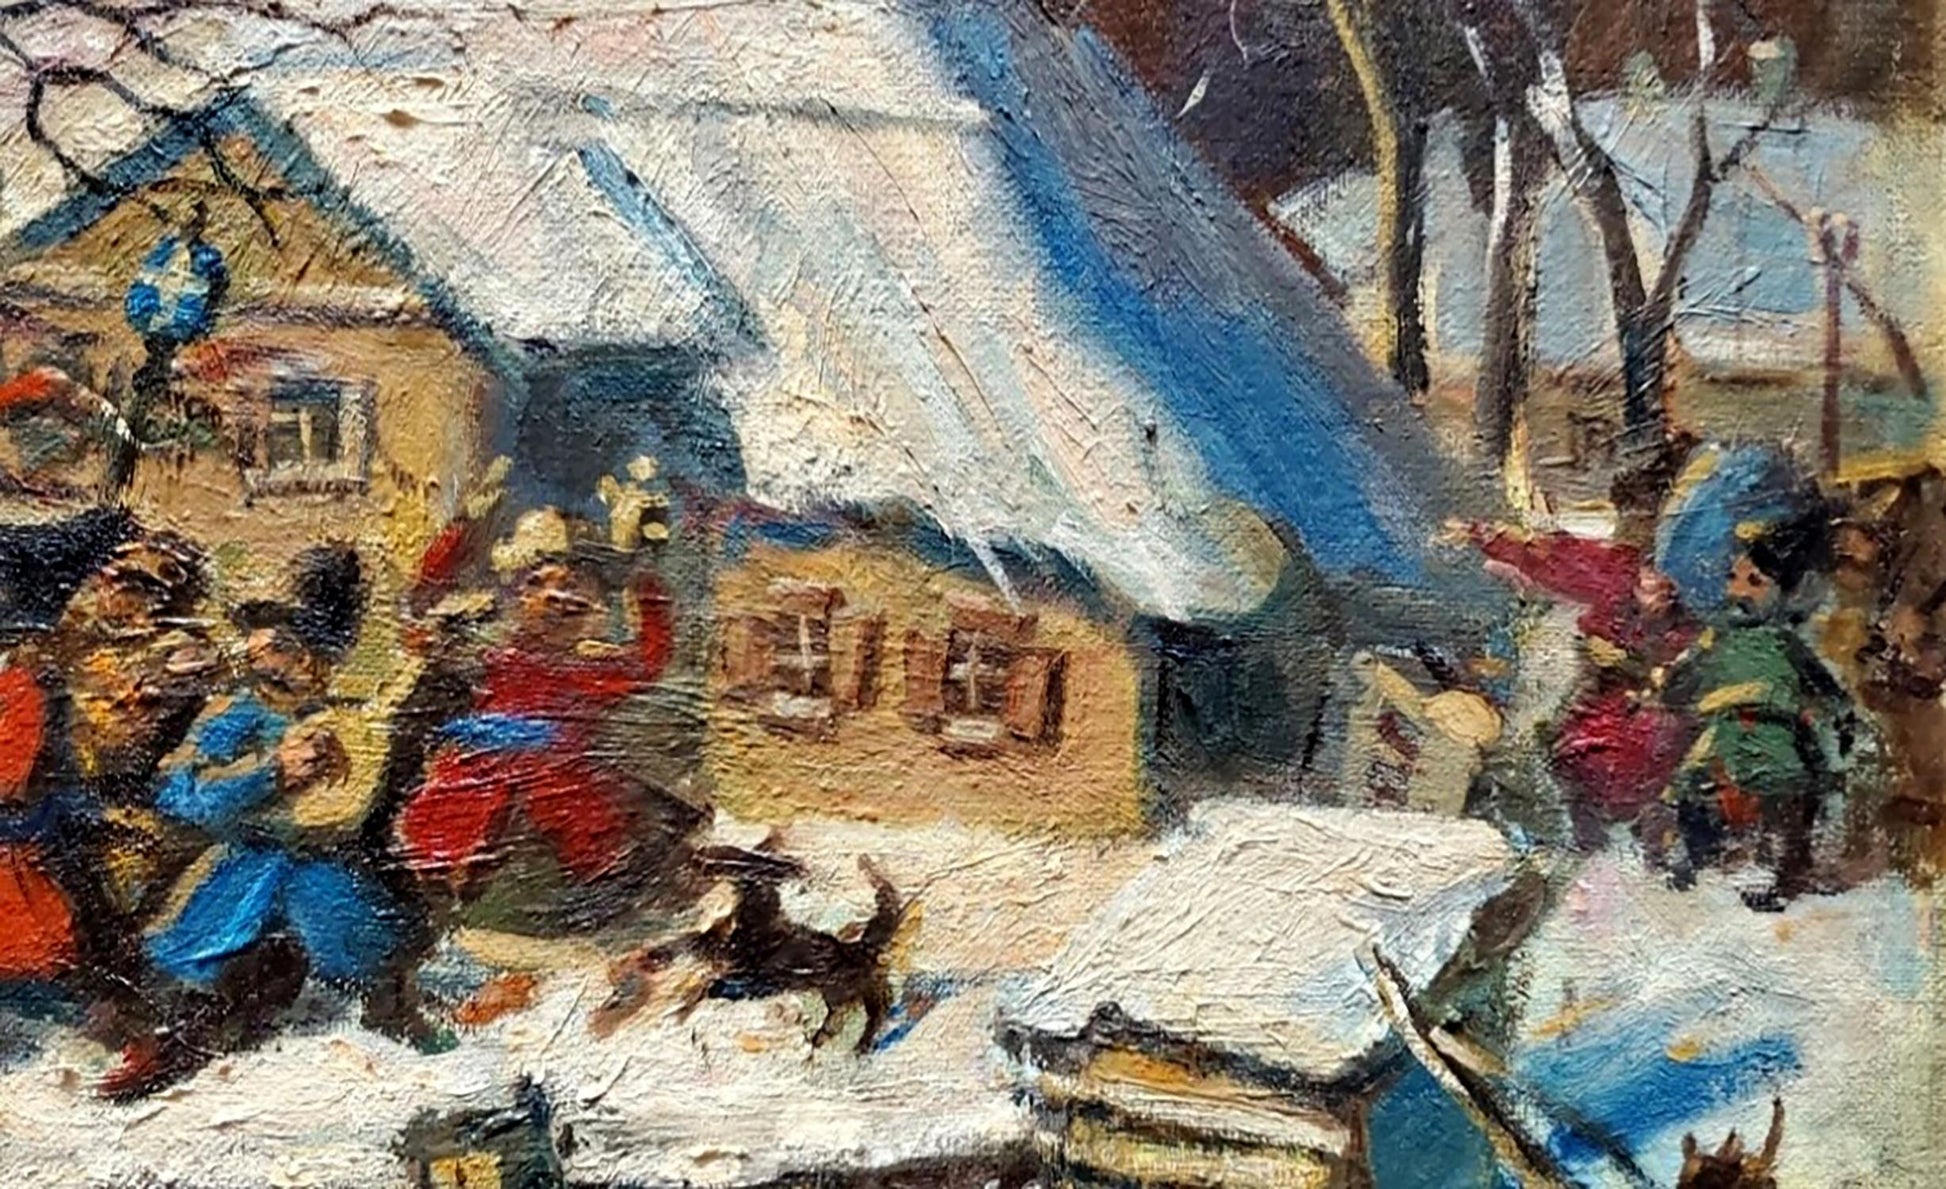 Litvinov's "Carols in a Village" artwork, showcasing traditional Ukrainian celebrations.